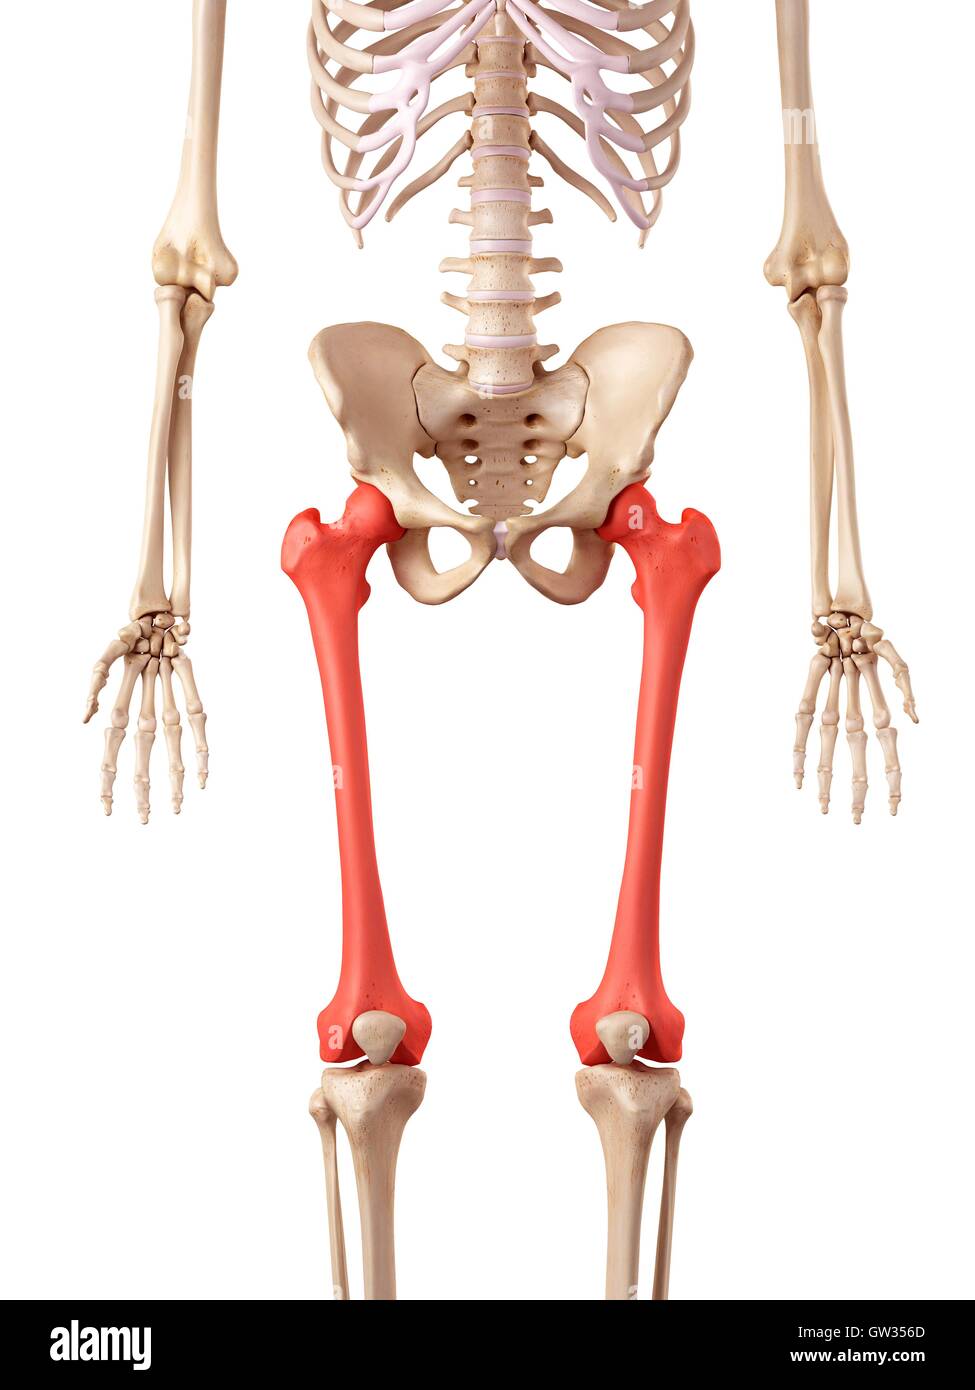 Biggest bone in human body